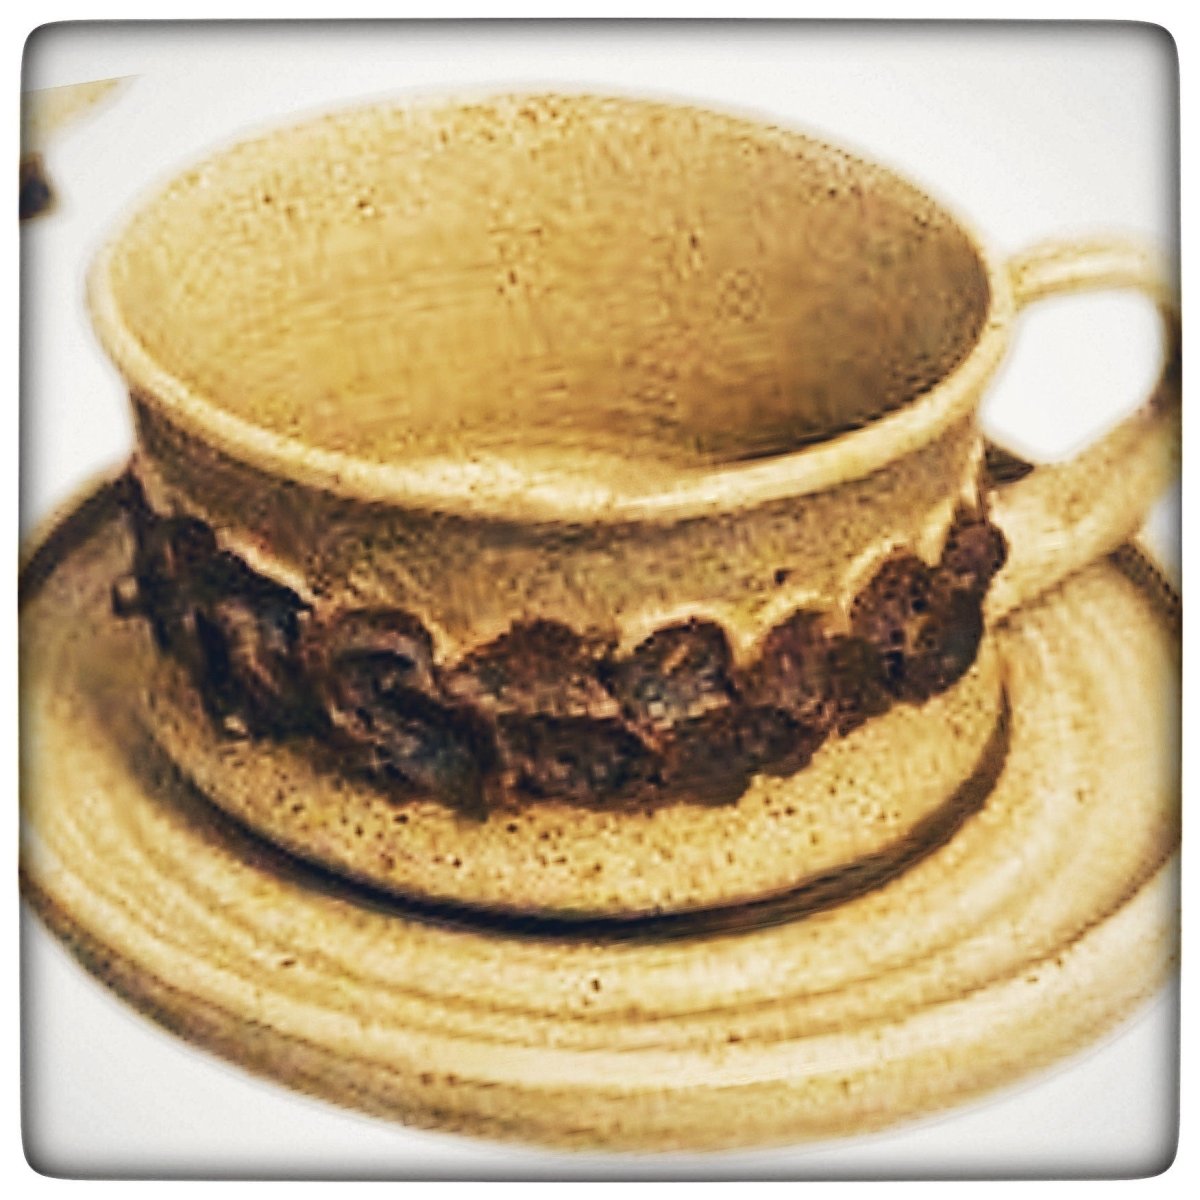 Staffan Sunnegårdh | Chamotte | Tea-Coffee pot plus 2 Cups & Saucers - Chinamania.shop